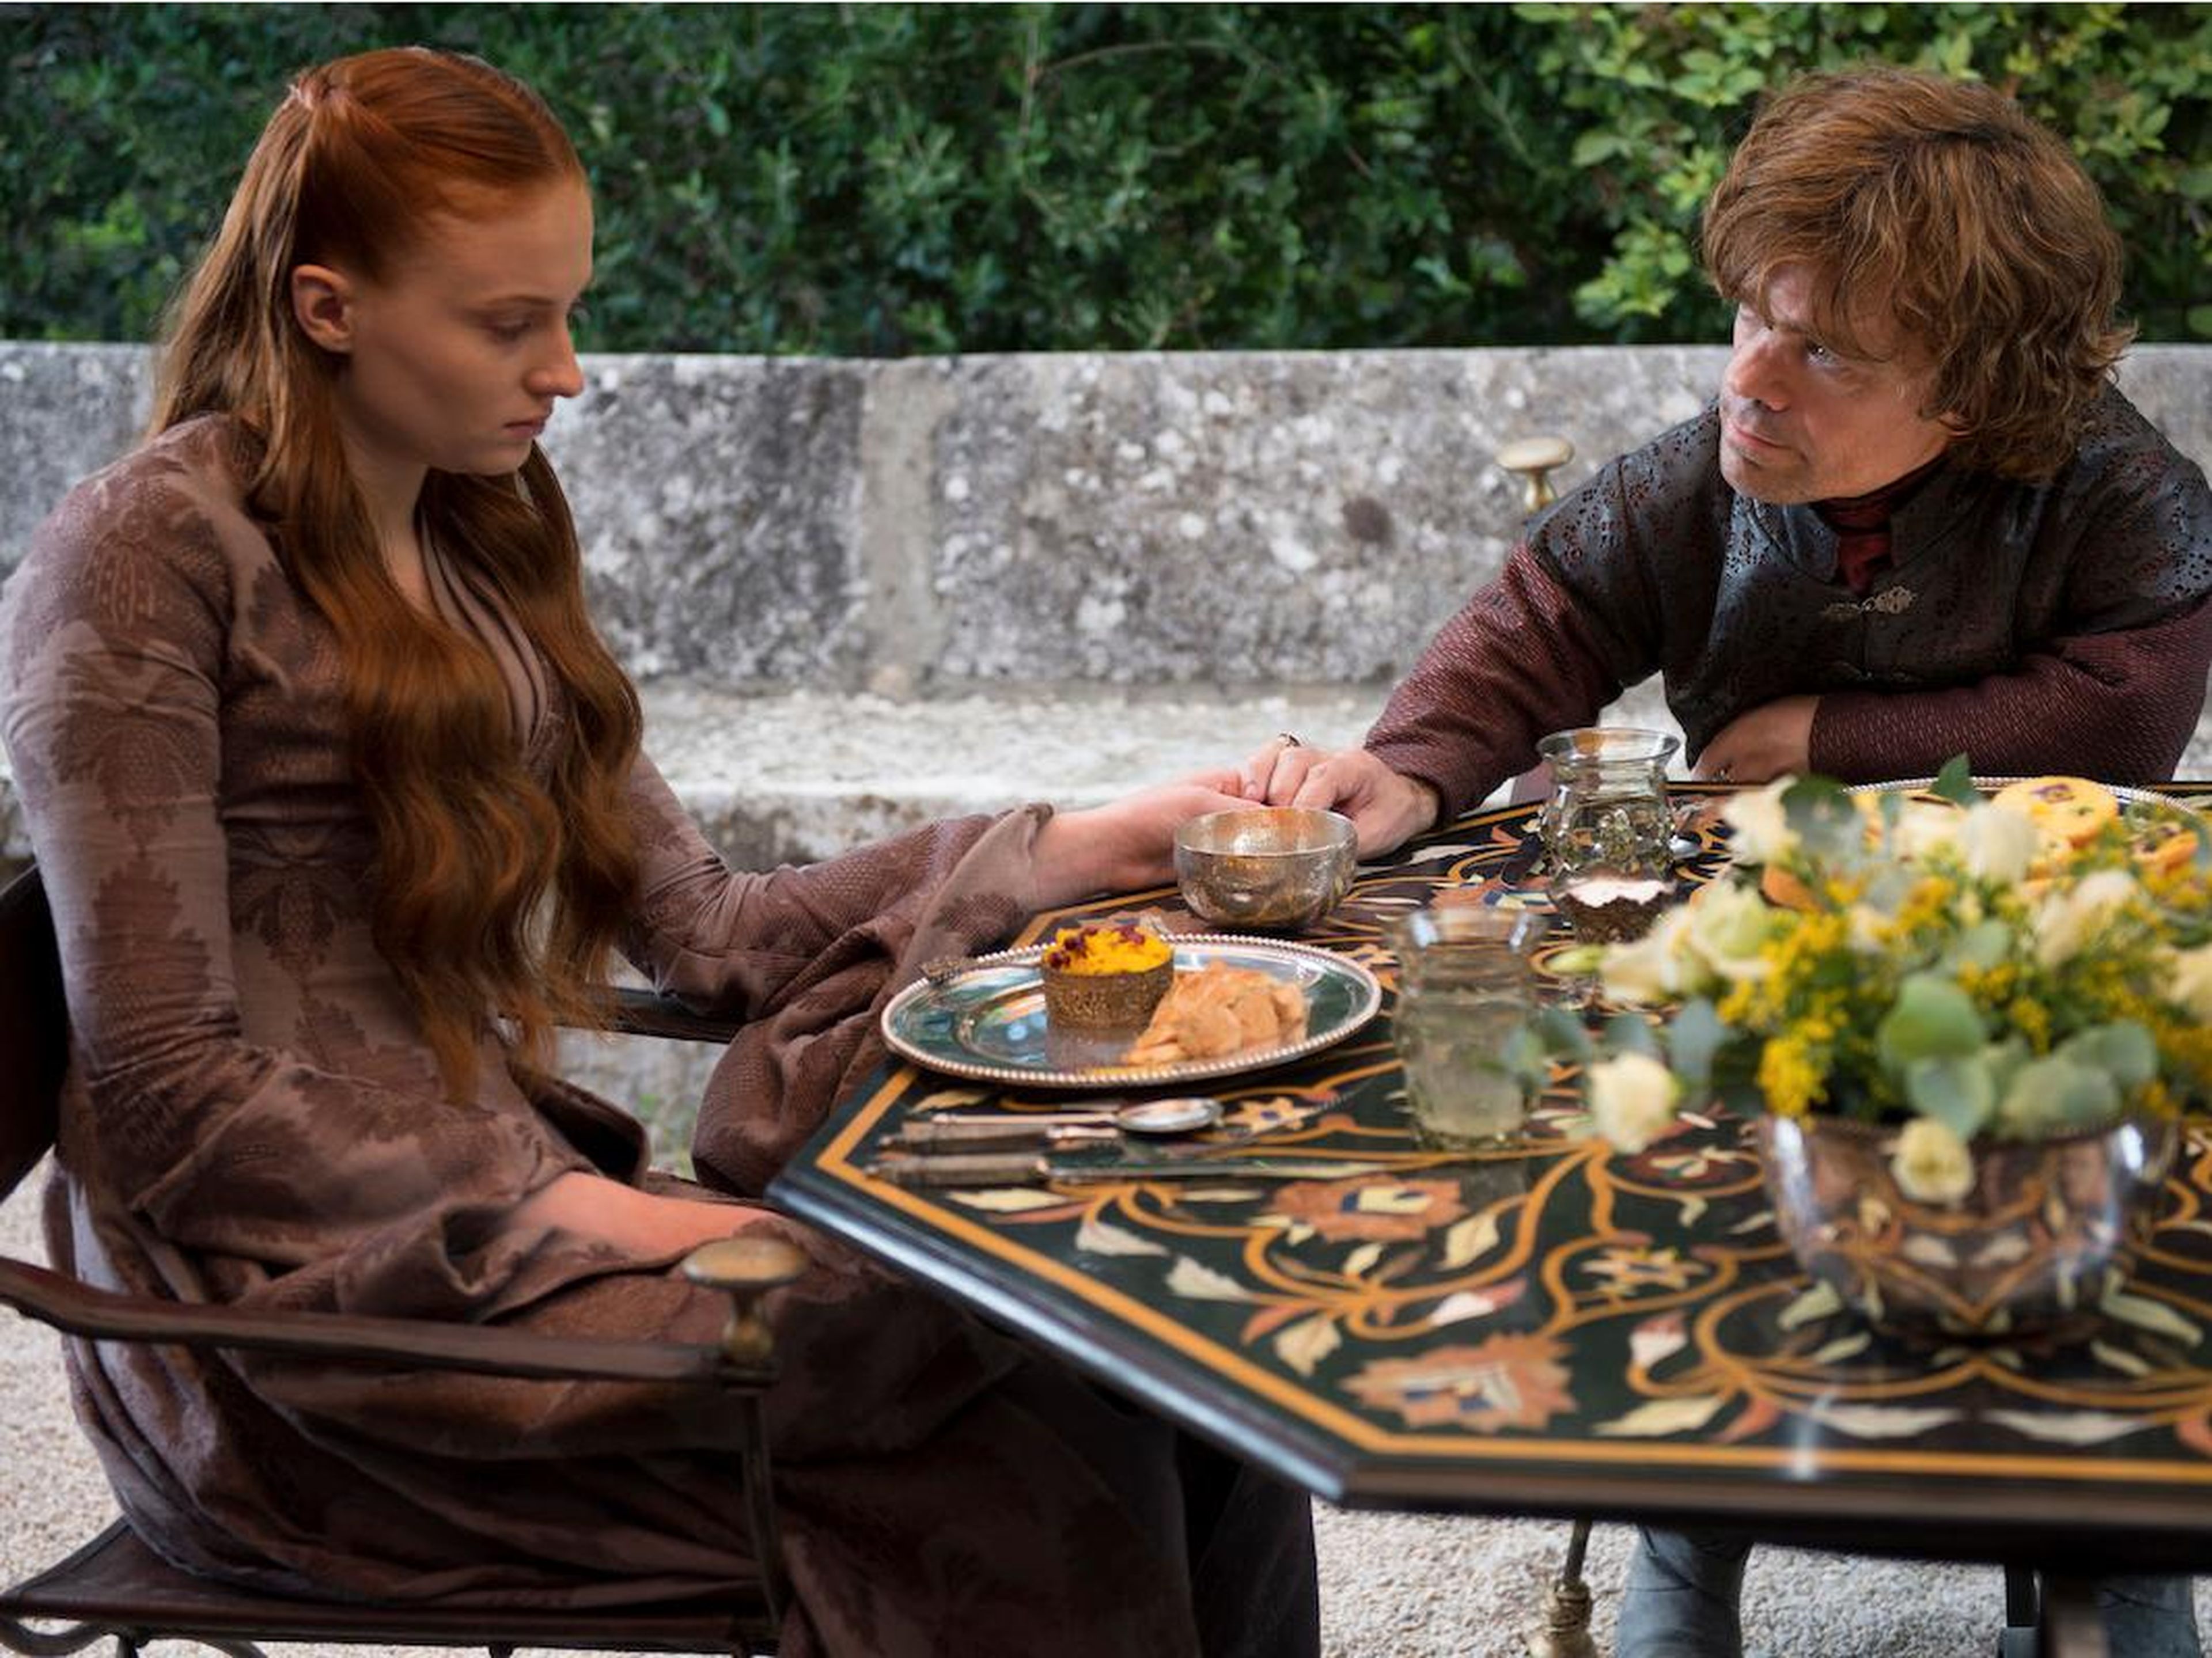 Tyrion was always kind to Sansa.